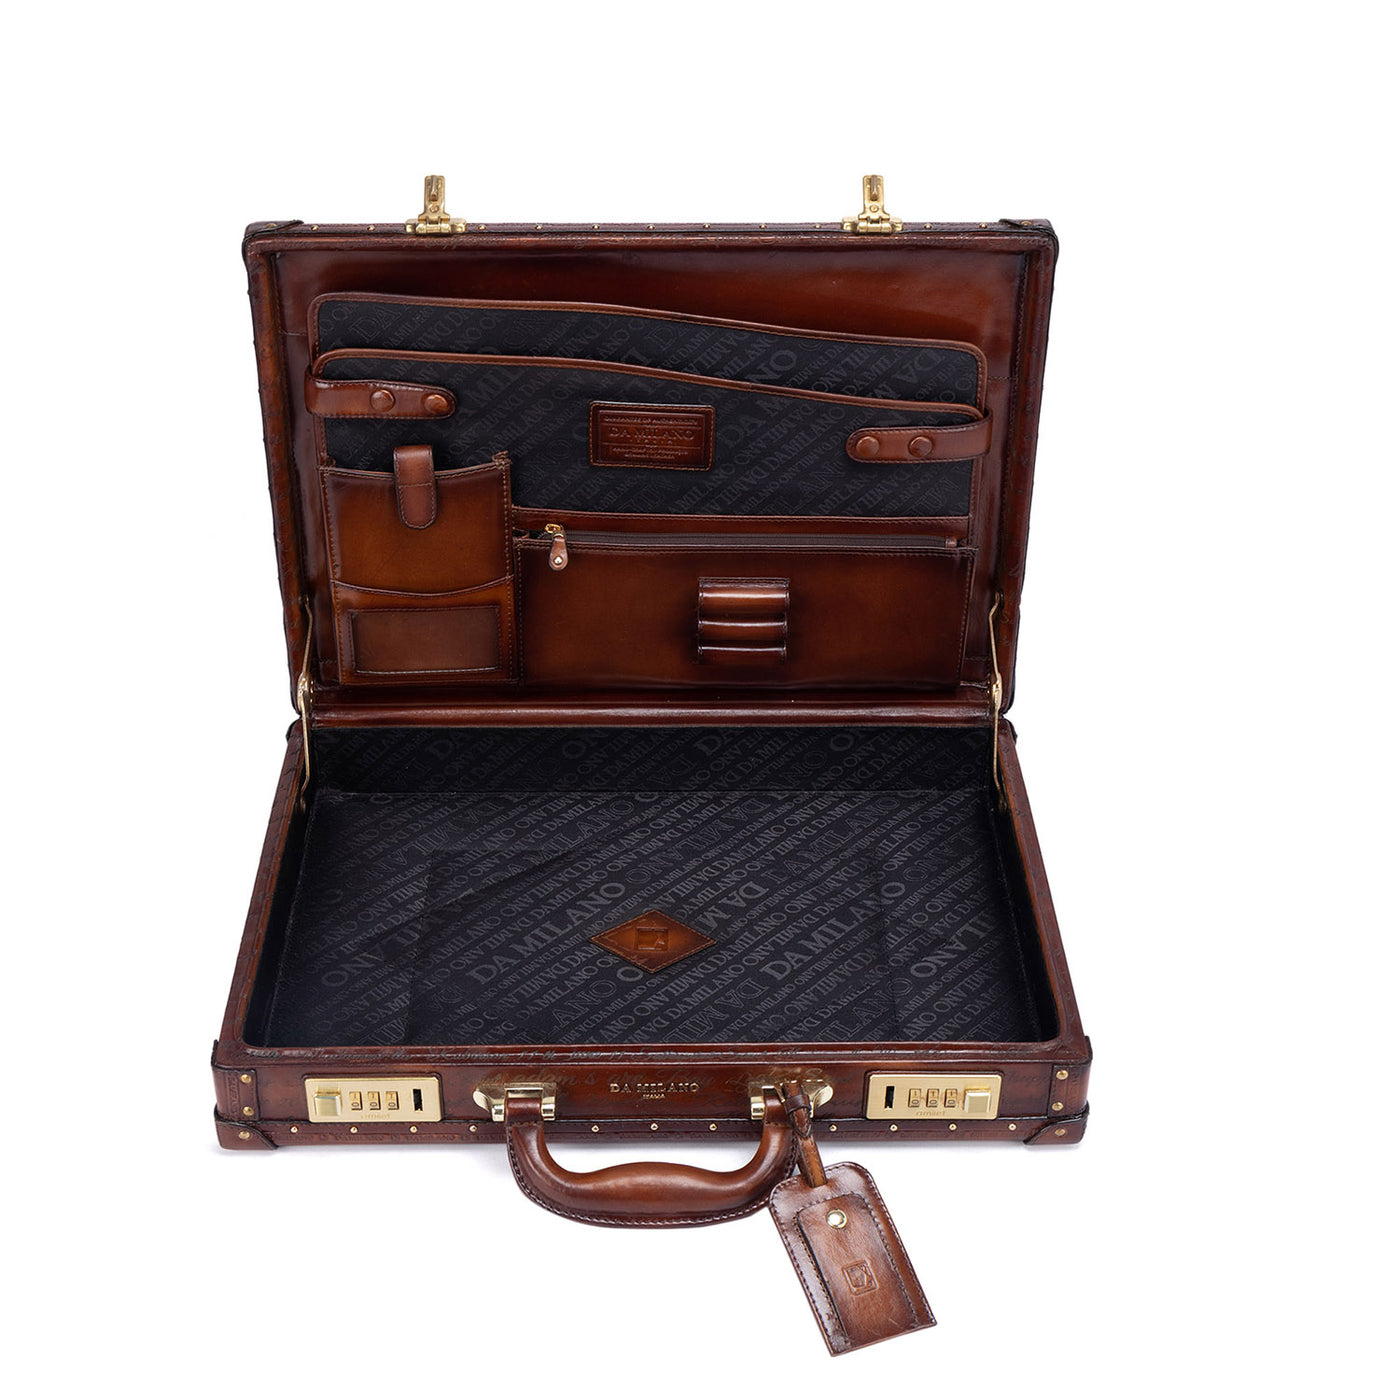 Signato Leather Briefcase - Cognac